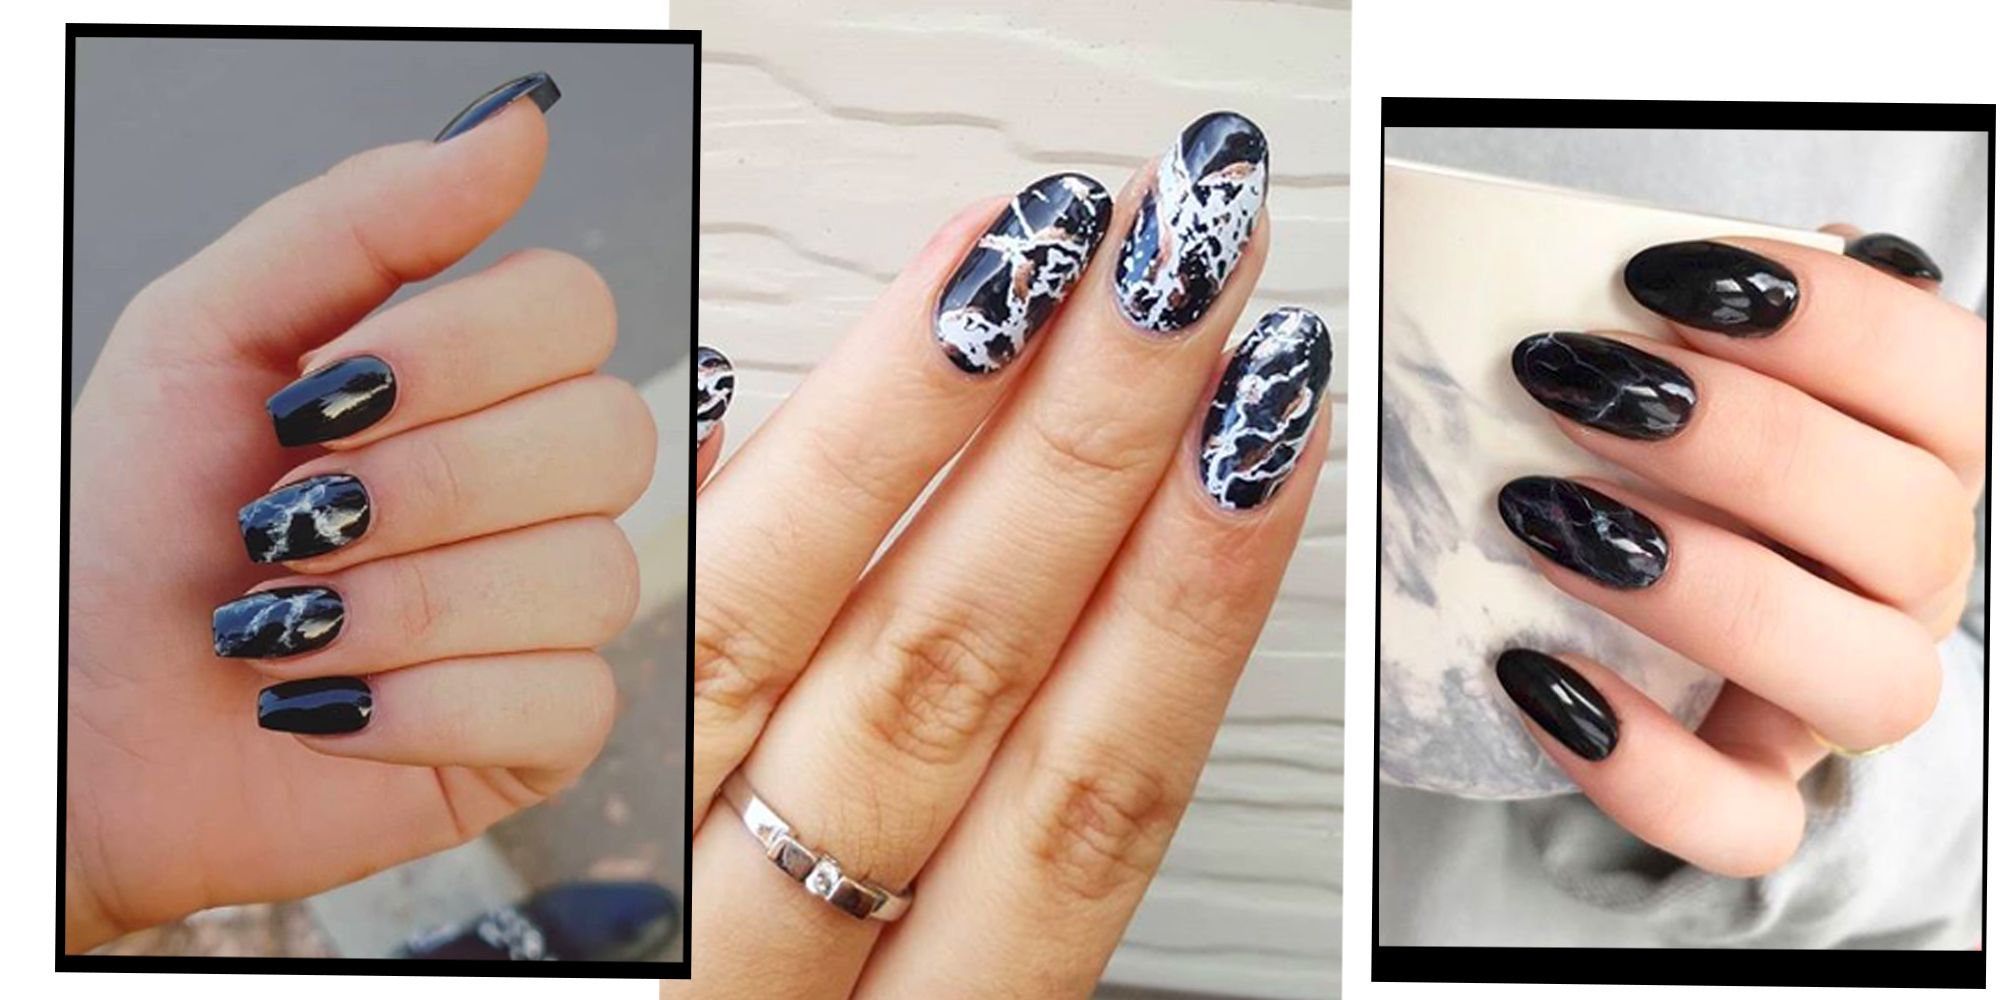 9. Matte Black Gel Nails with Marble Design - wide 10